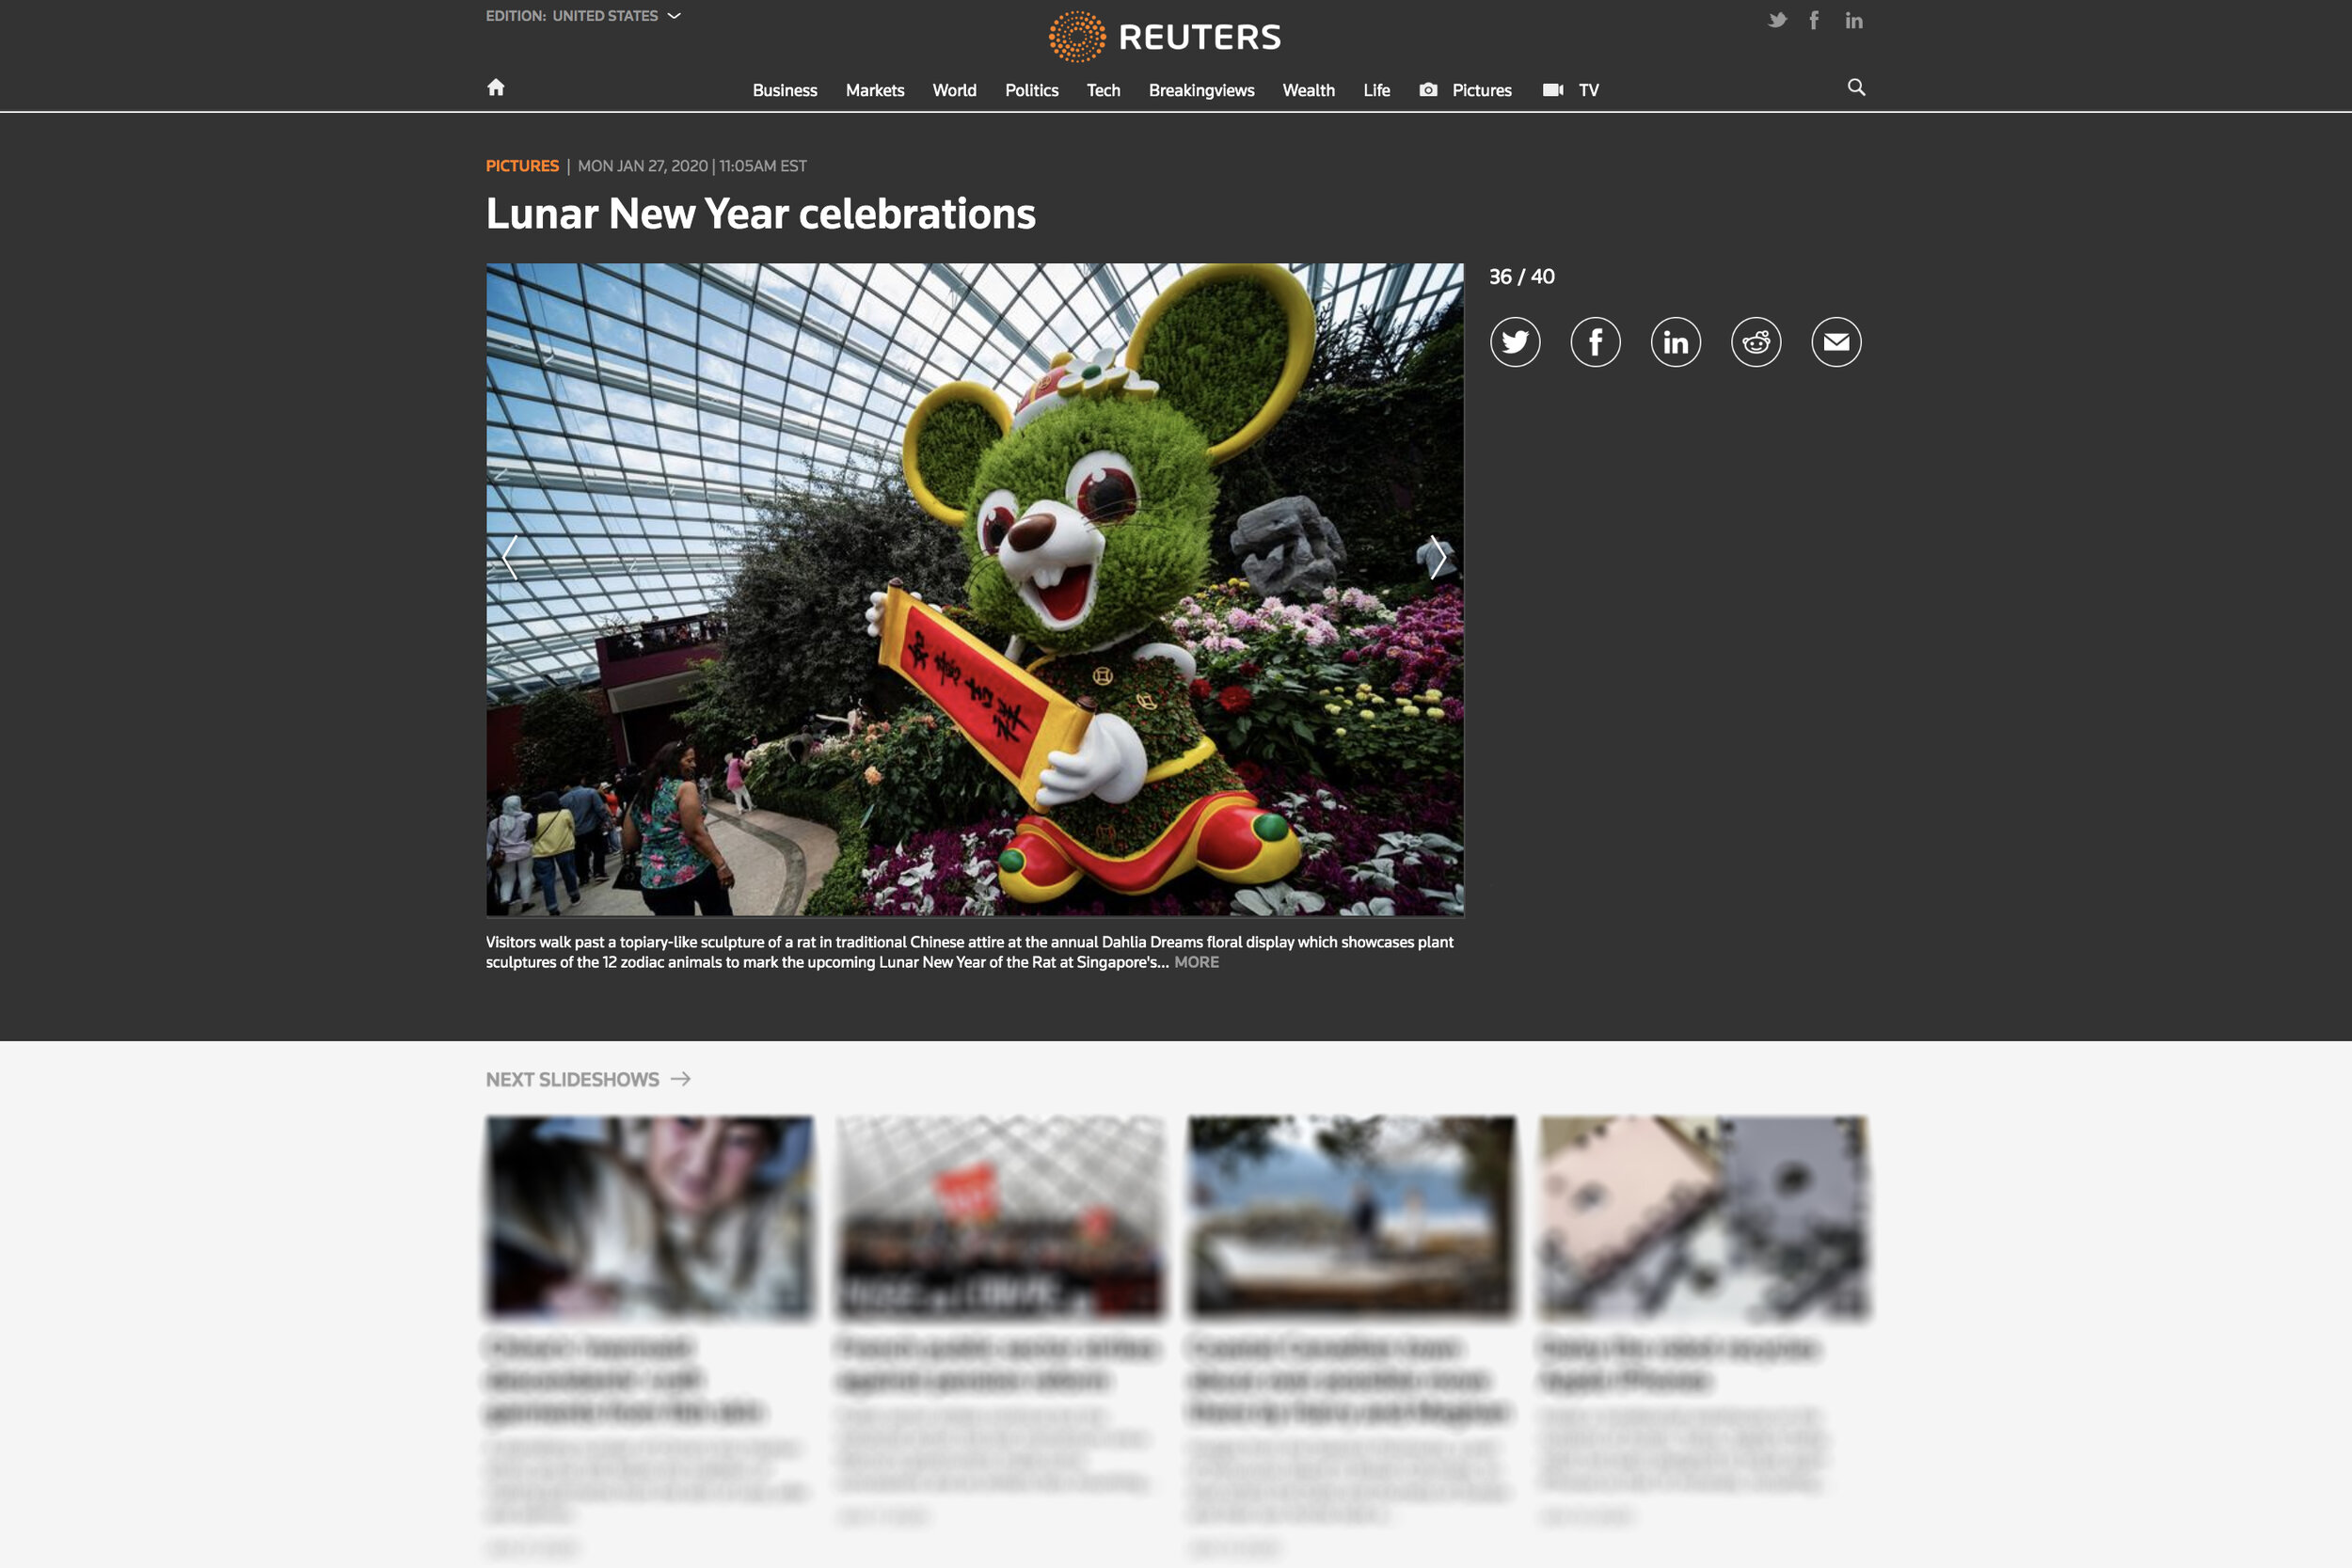 2020 Lunar New Year celebrations slideshow on Reuters.com